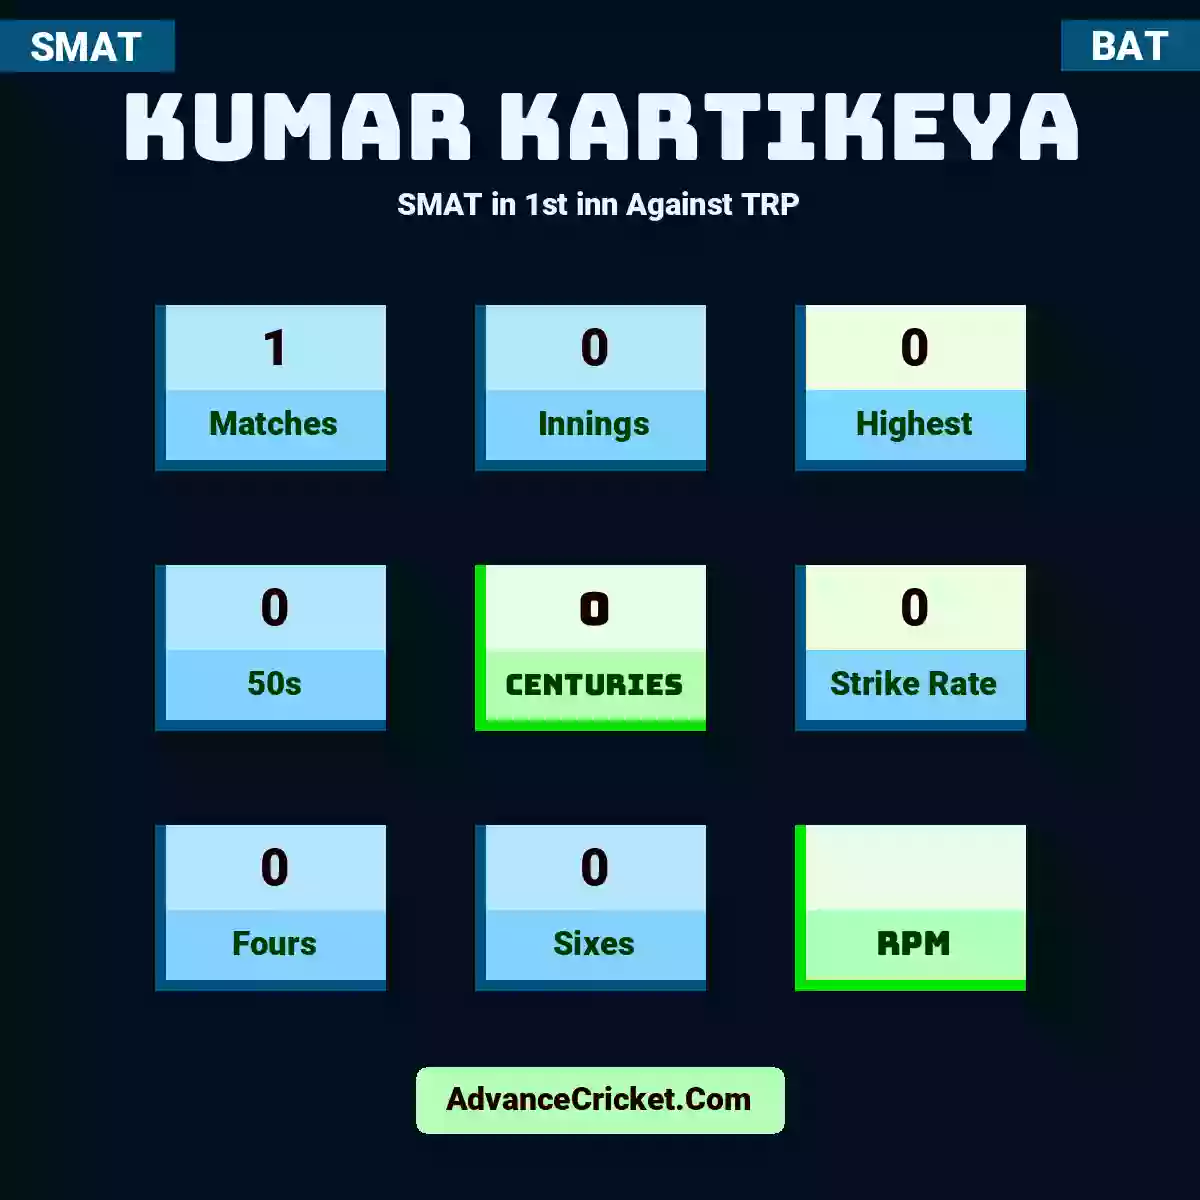 Kumar Kartikeya SMAT  in 1st inn Against TRP, Kumar Kartikeya played 1 matches, scored 0 runs as highest, 0 half-centuries, and 0 centuries, with a strike rate of 0. K.Kartikeya hit 0 fours and 0 sixes.